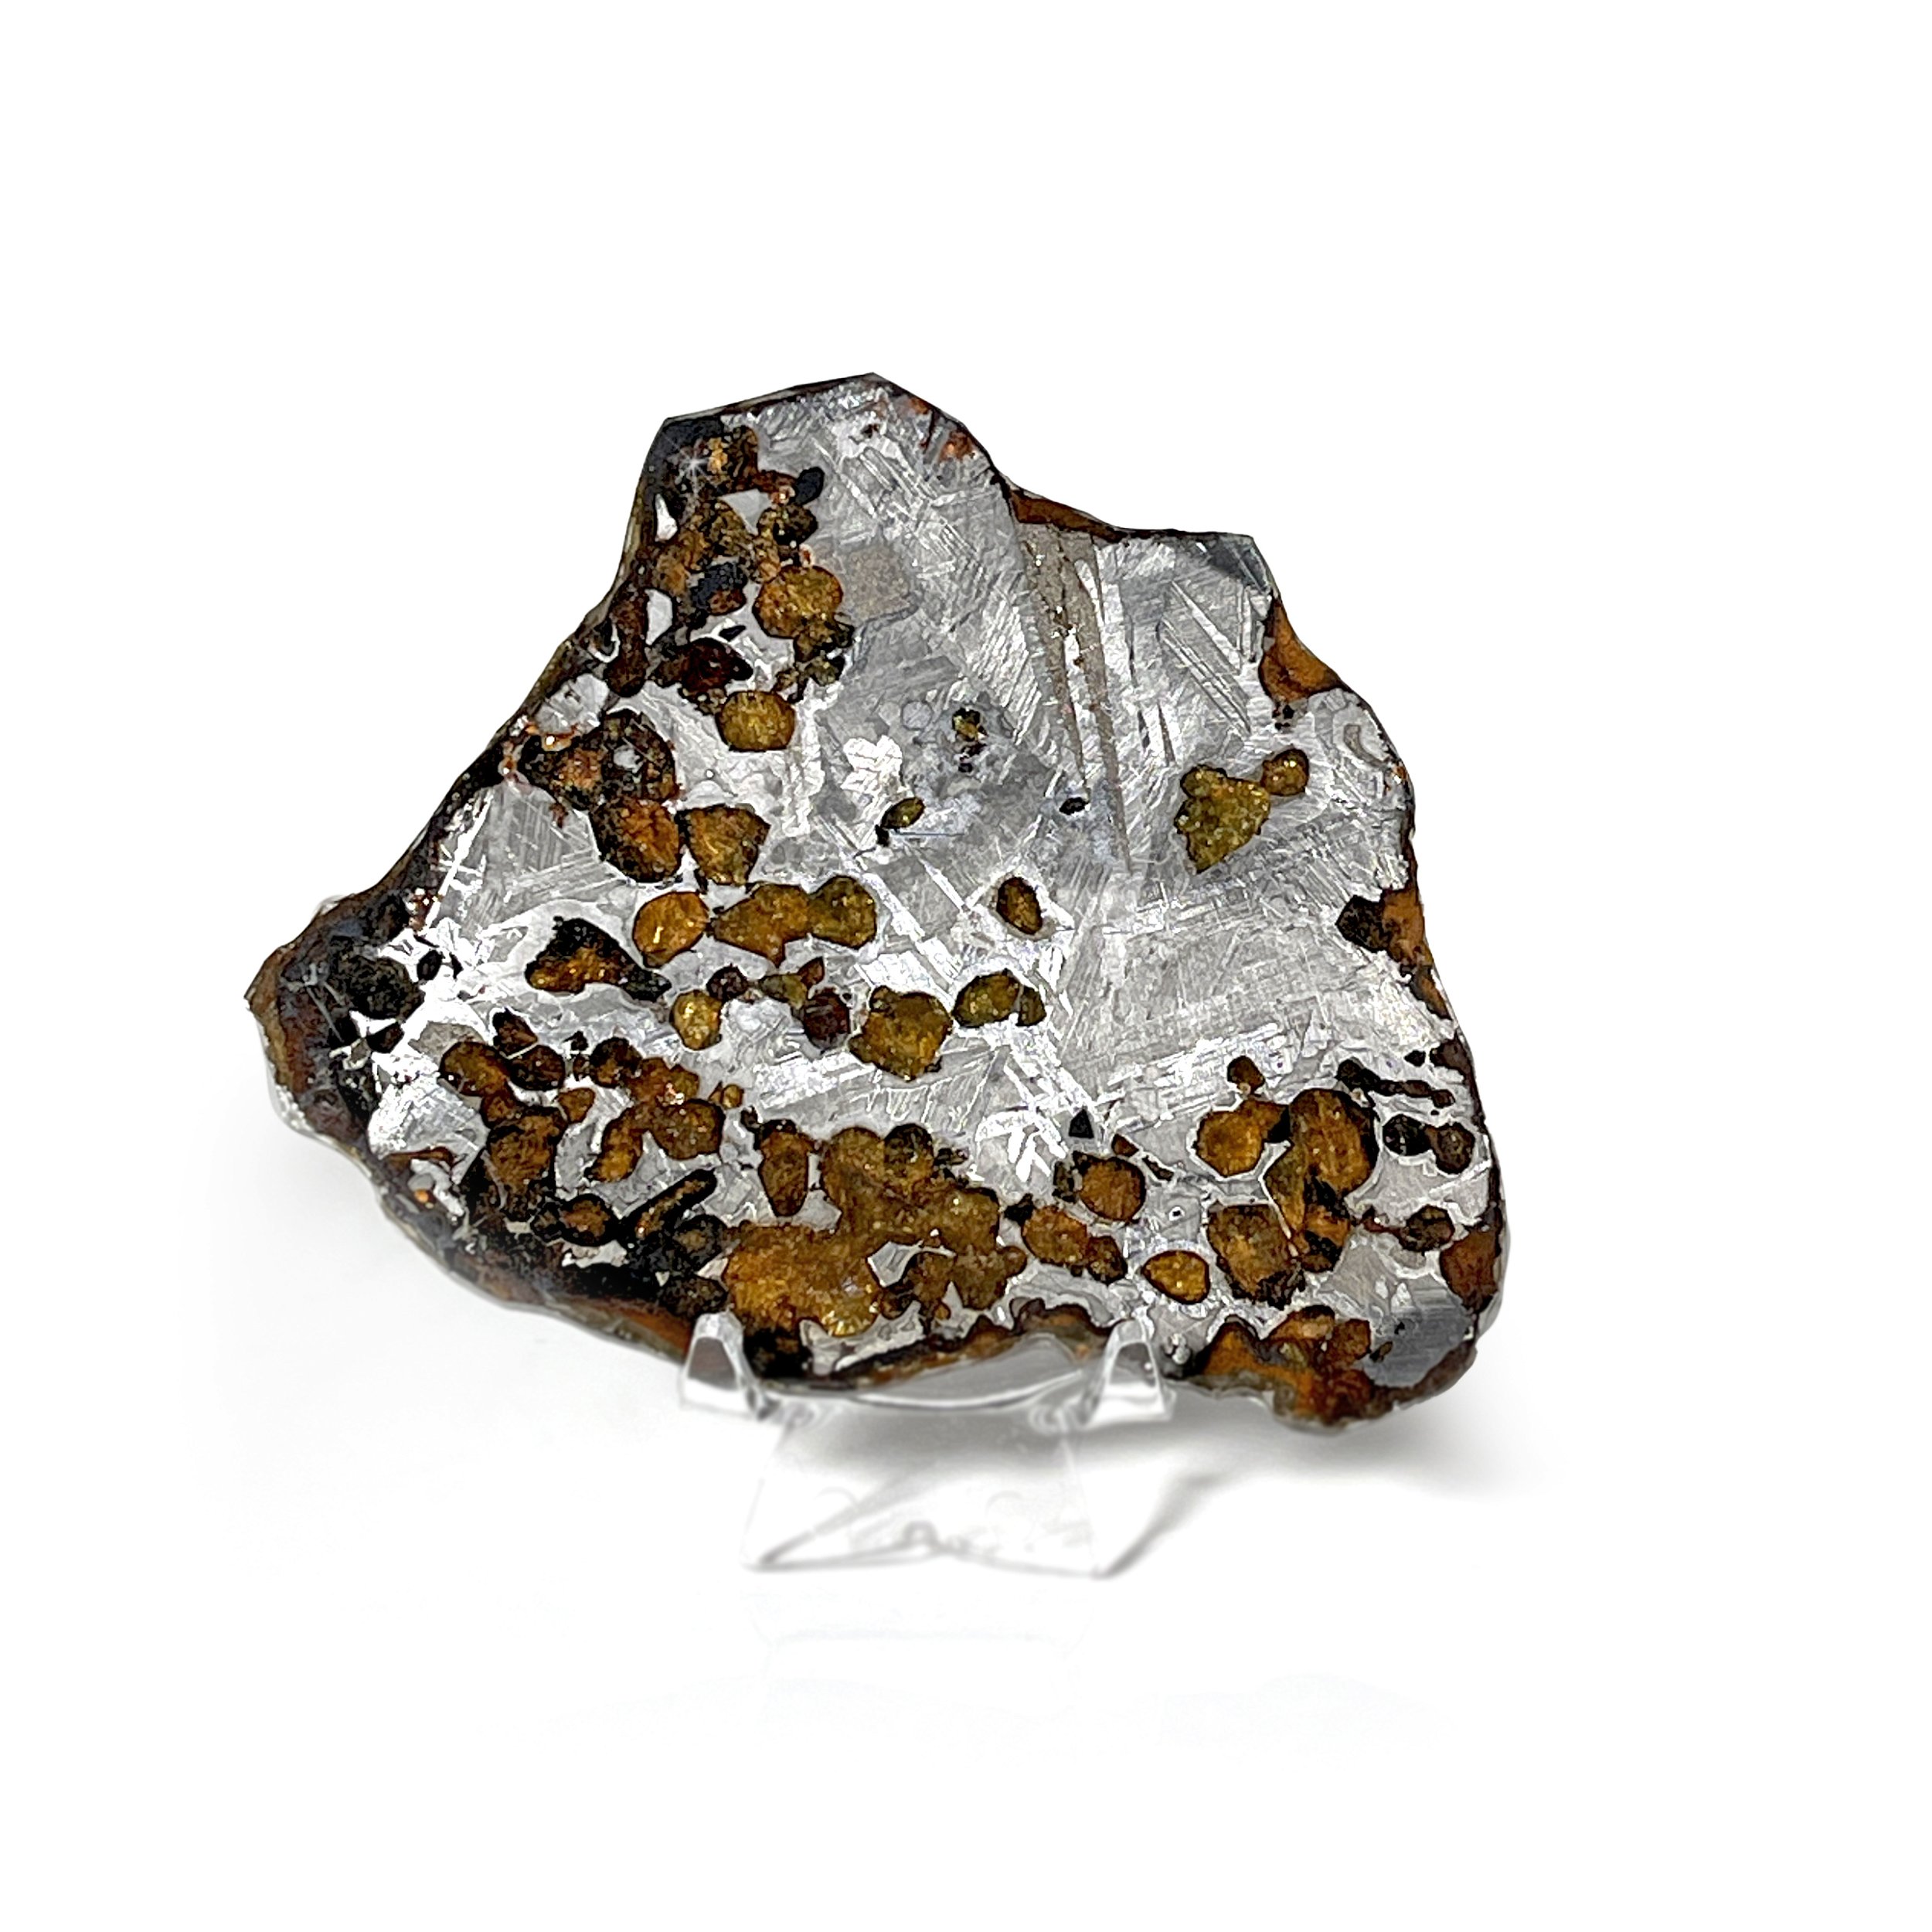 Seymchan Pallasite Meteorite Slice With Iron Nickel Patterns On Half